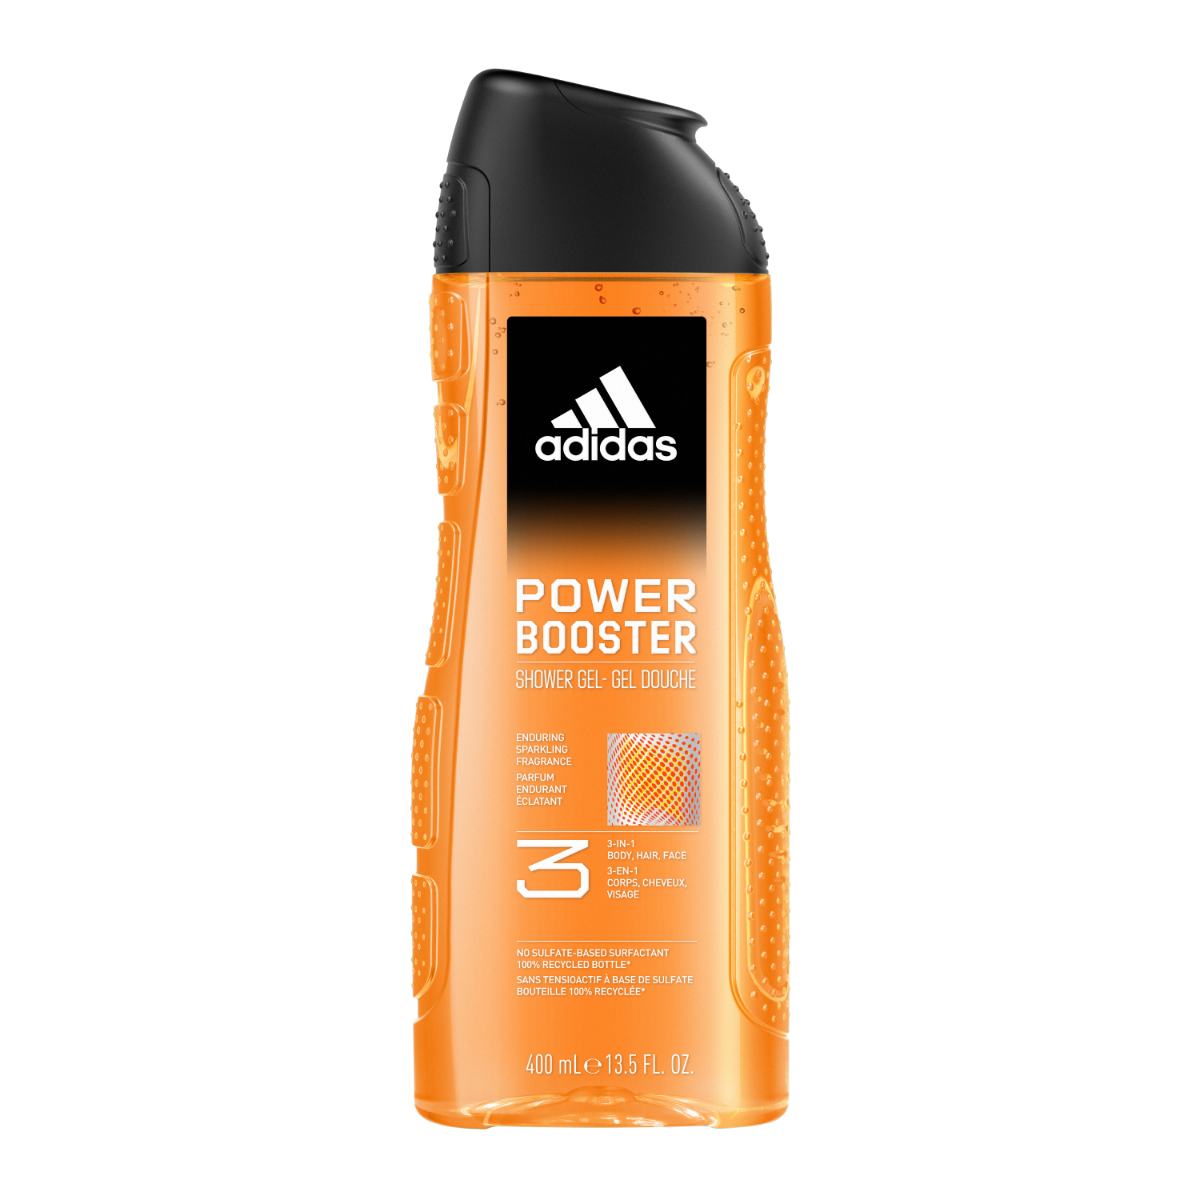 Adidas Power Booster гель для душа, 400 ml adidas ice dive гель для душа 400 ml